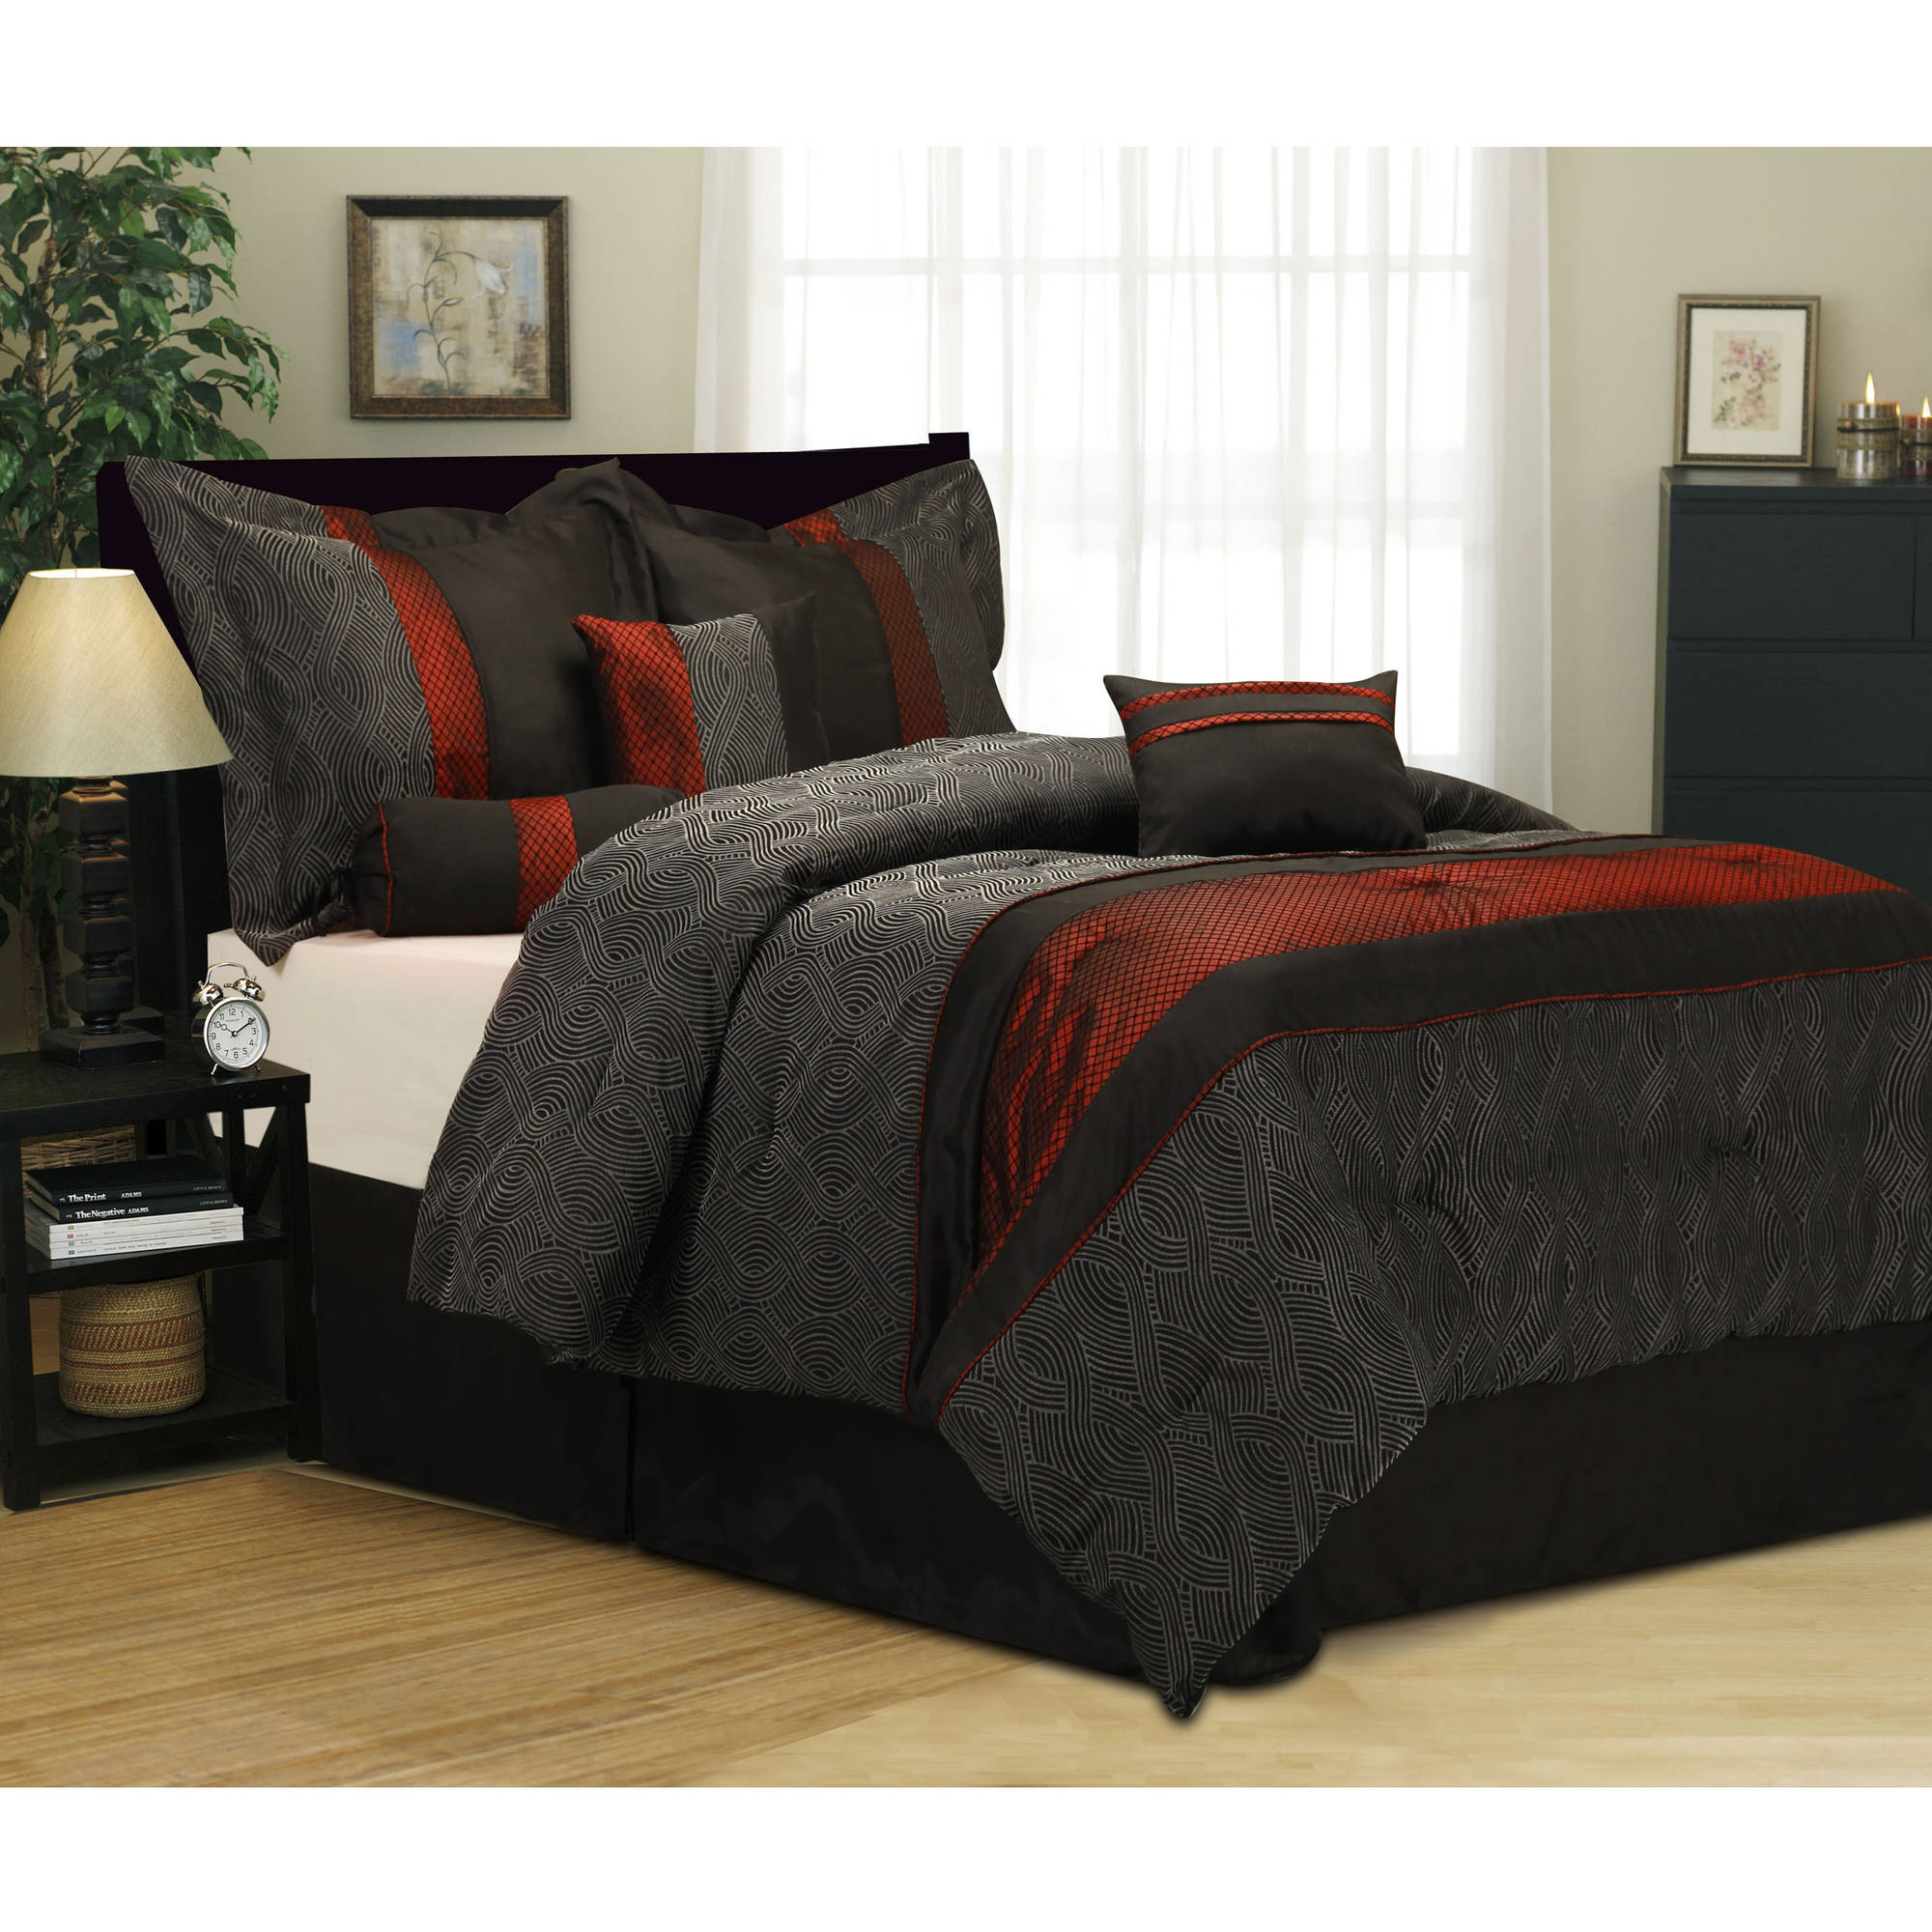 7 Piece Bedding Comforter Set Queen Size Black Red Shams Pillows